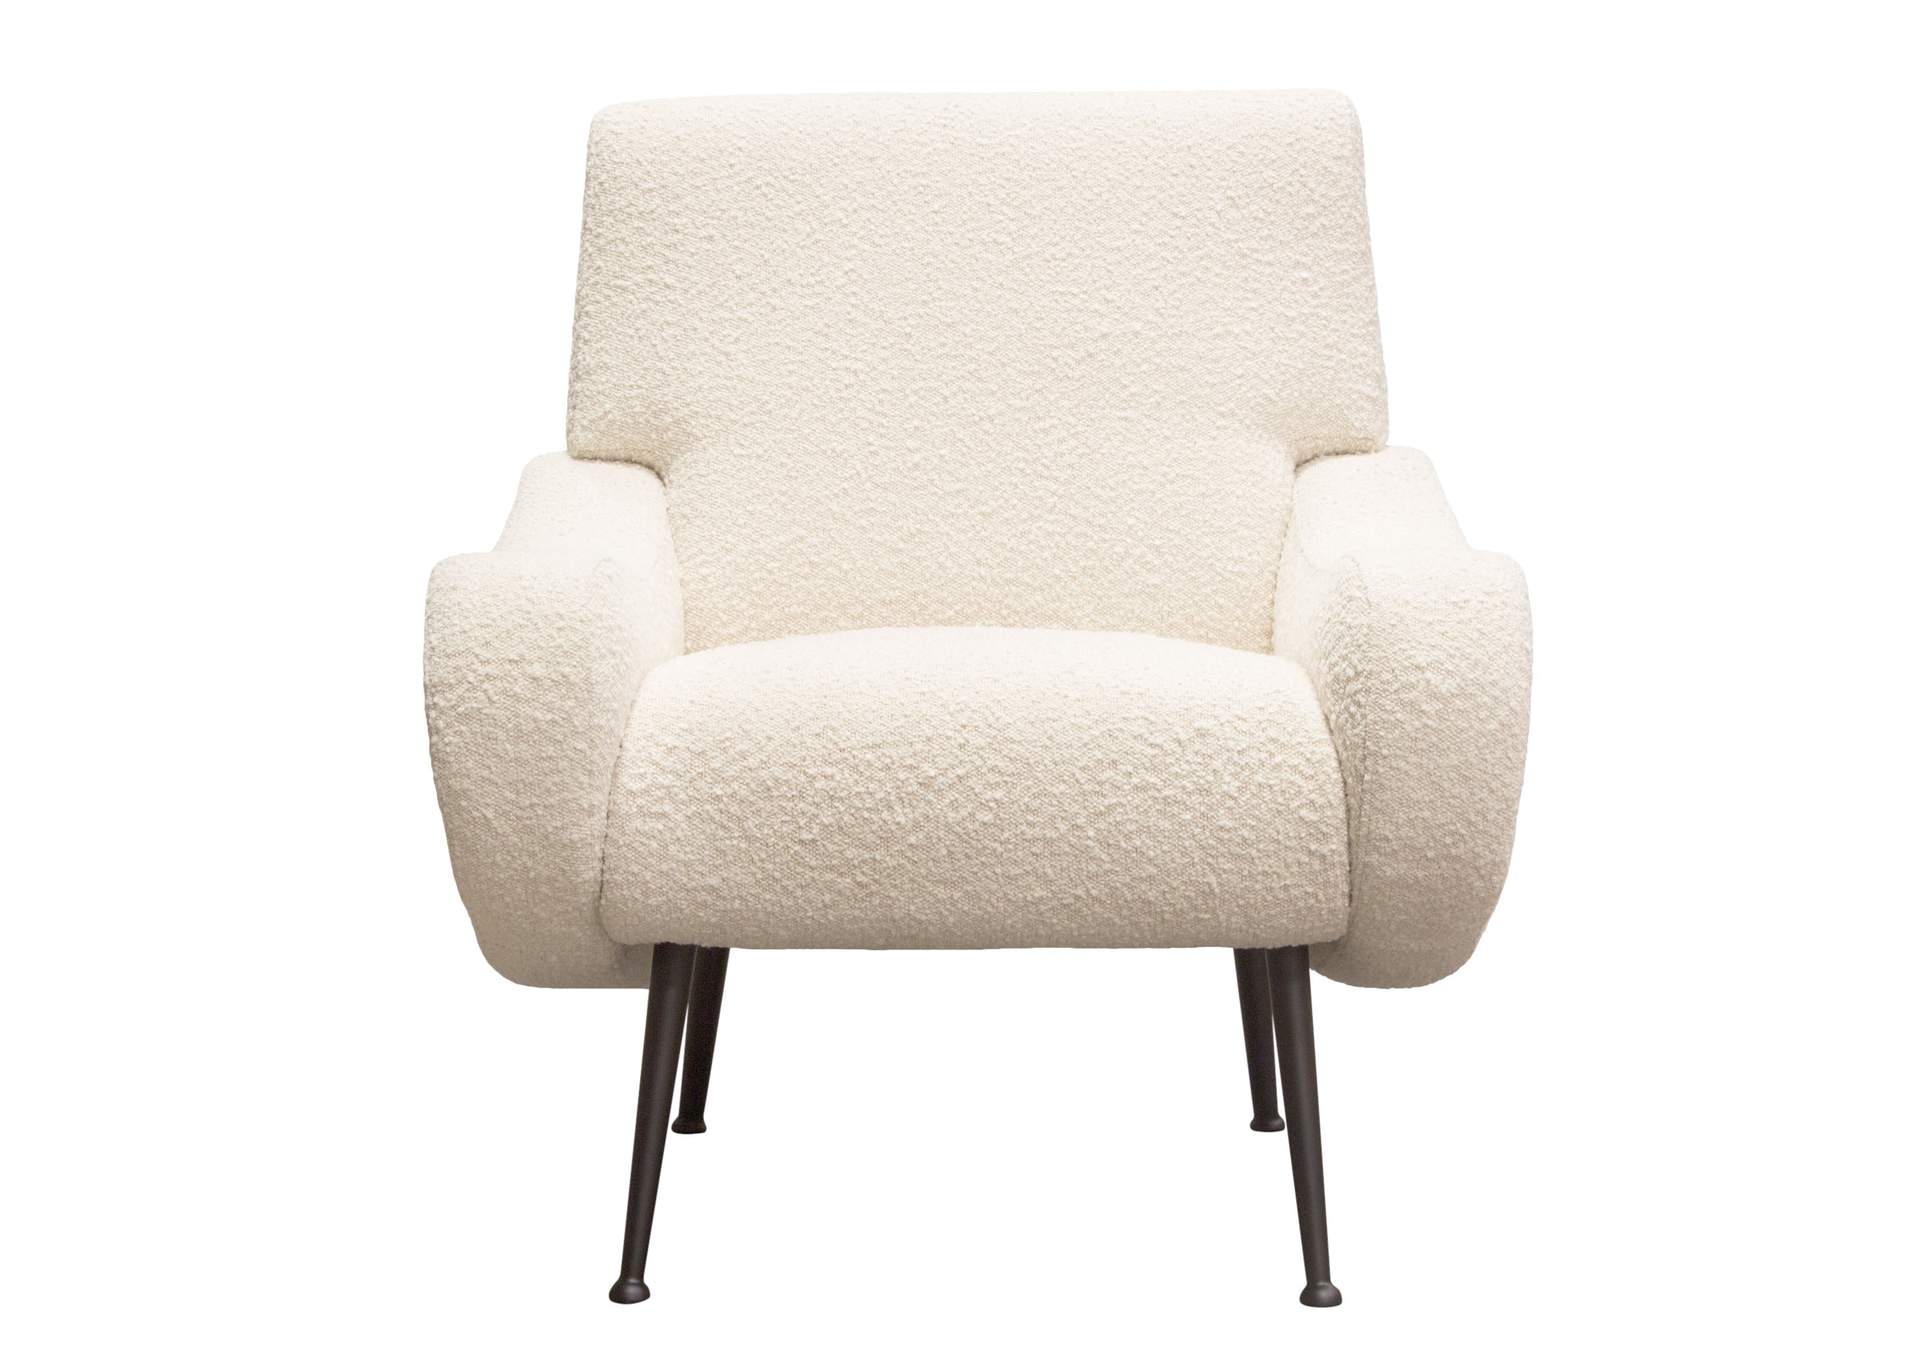 Cameron Accent Chair in Bone Boucle Textured Fabric w/ Black Leg by Diamond Sofa,Diamond Sofa